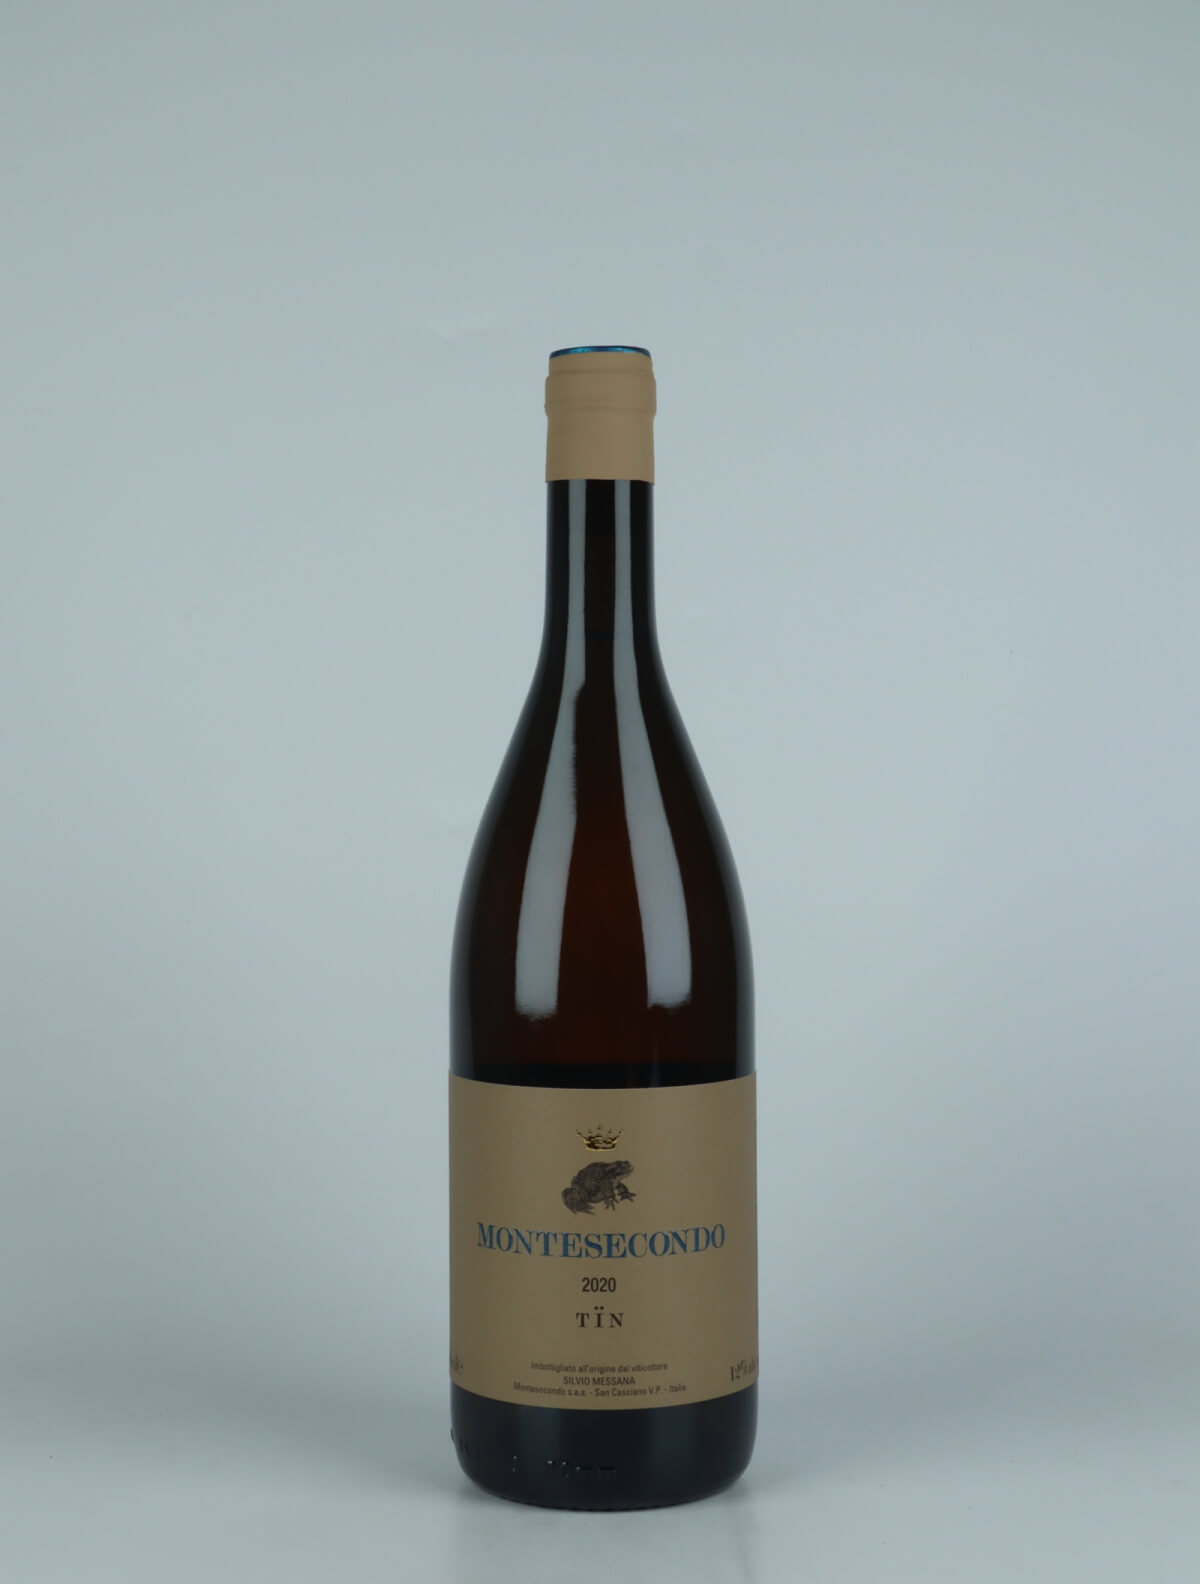 A bottle 2020 Tïn - Trebbiano Orange wine from Montesecondo, Tuscany in Italy